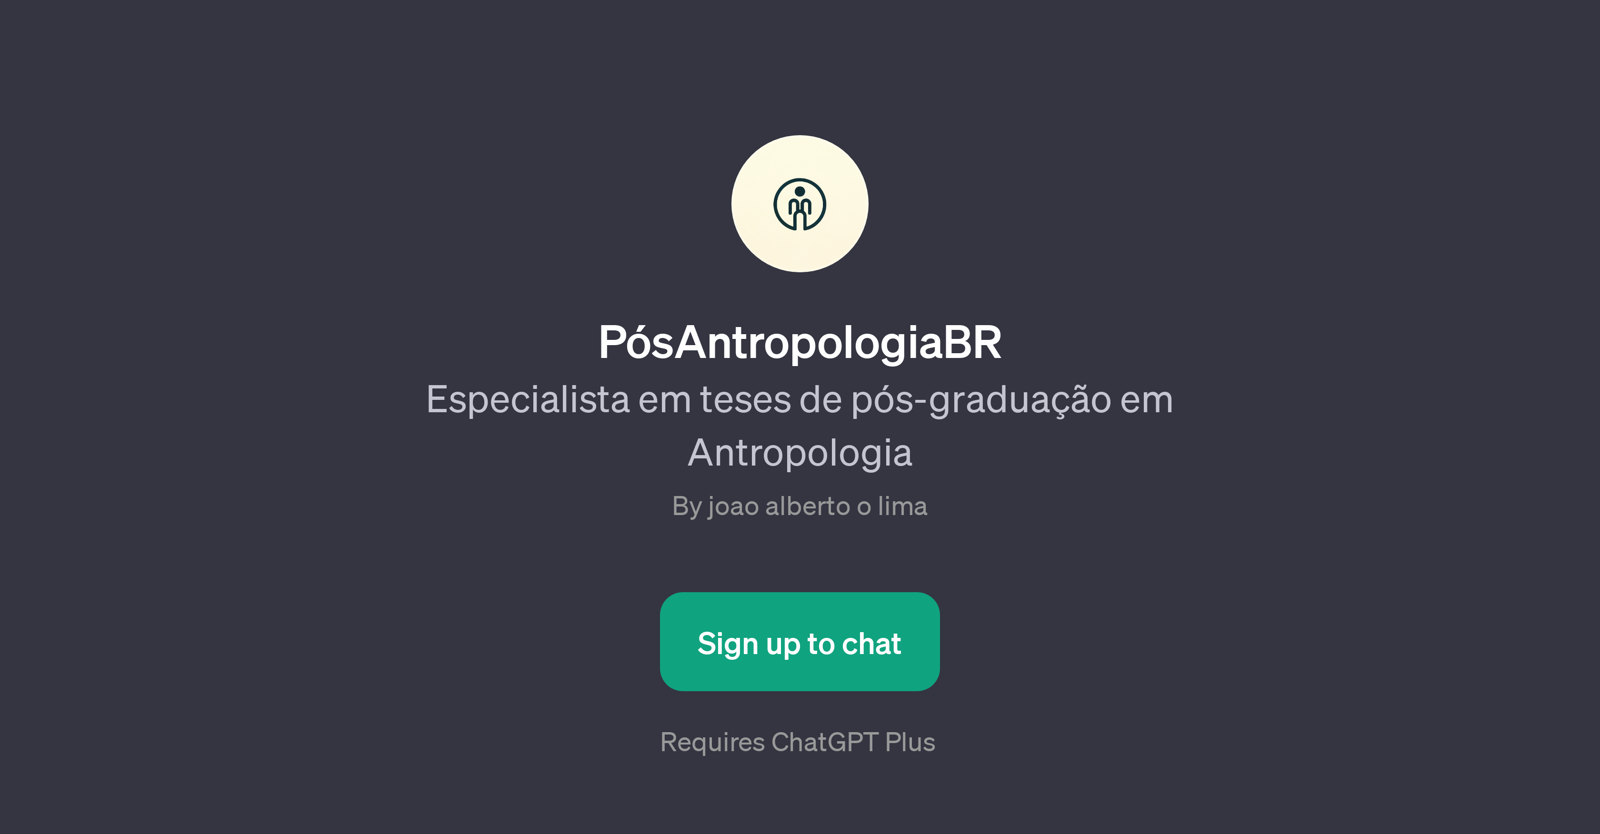 PsAntropologiaBR website